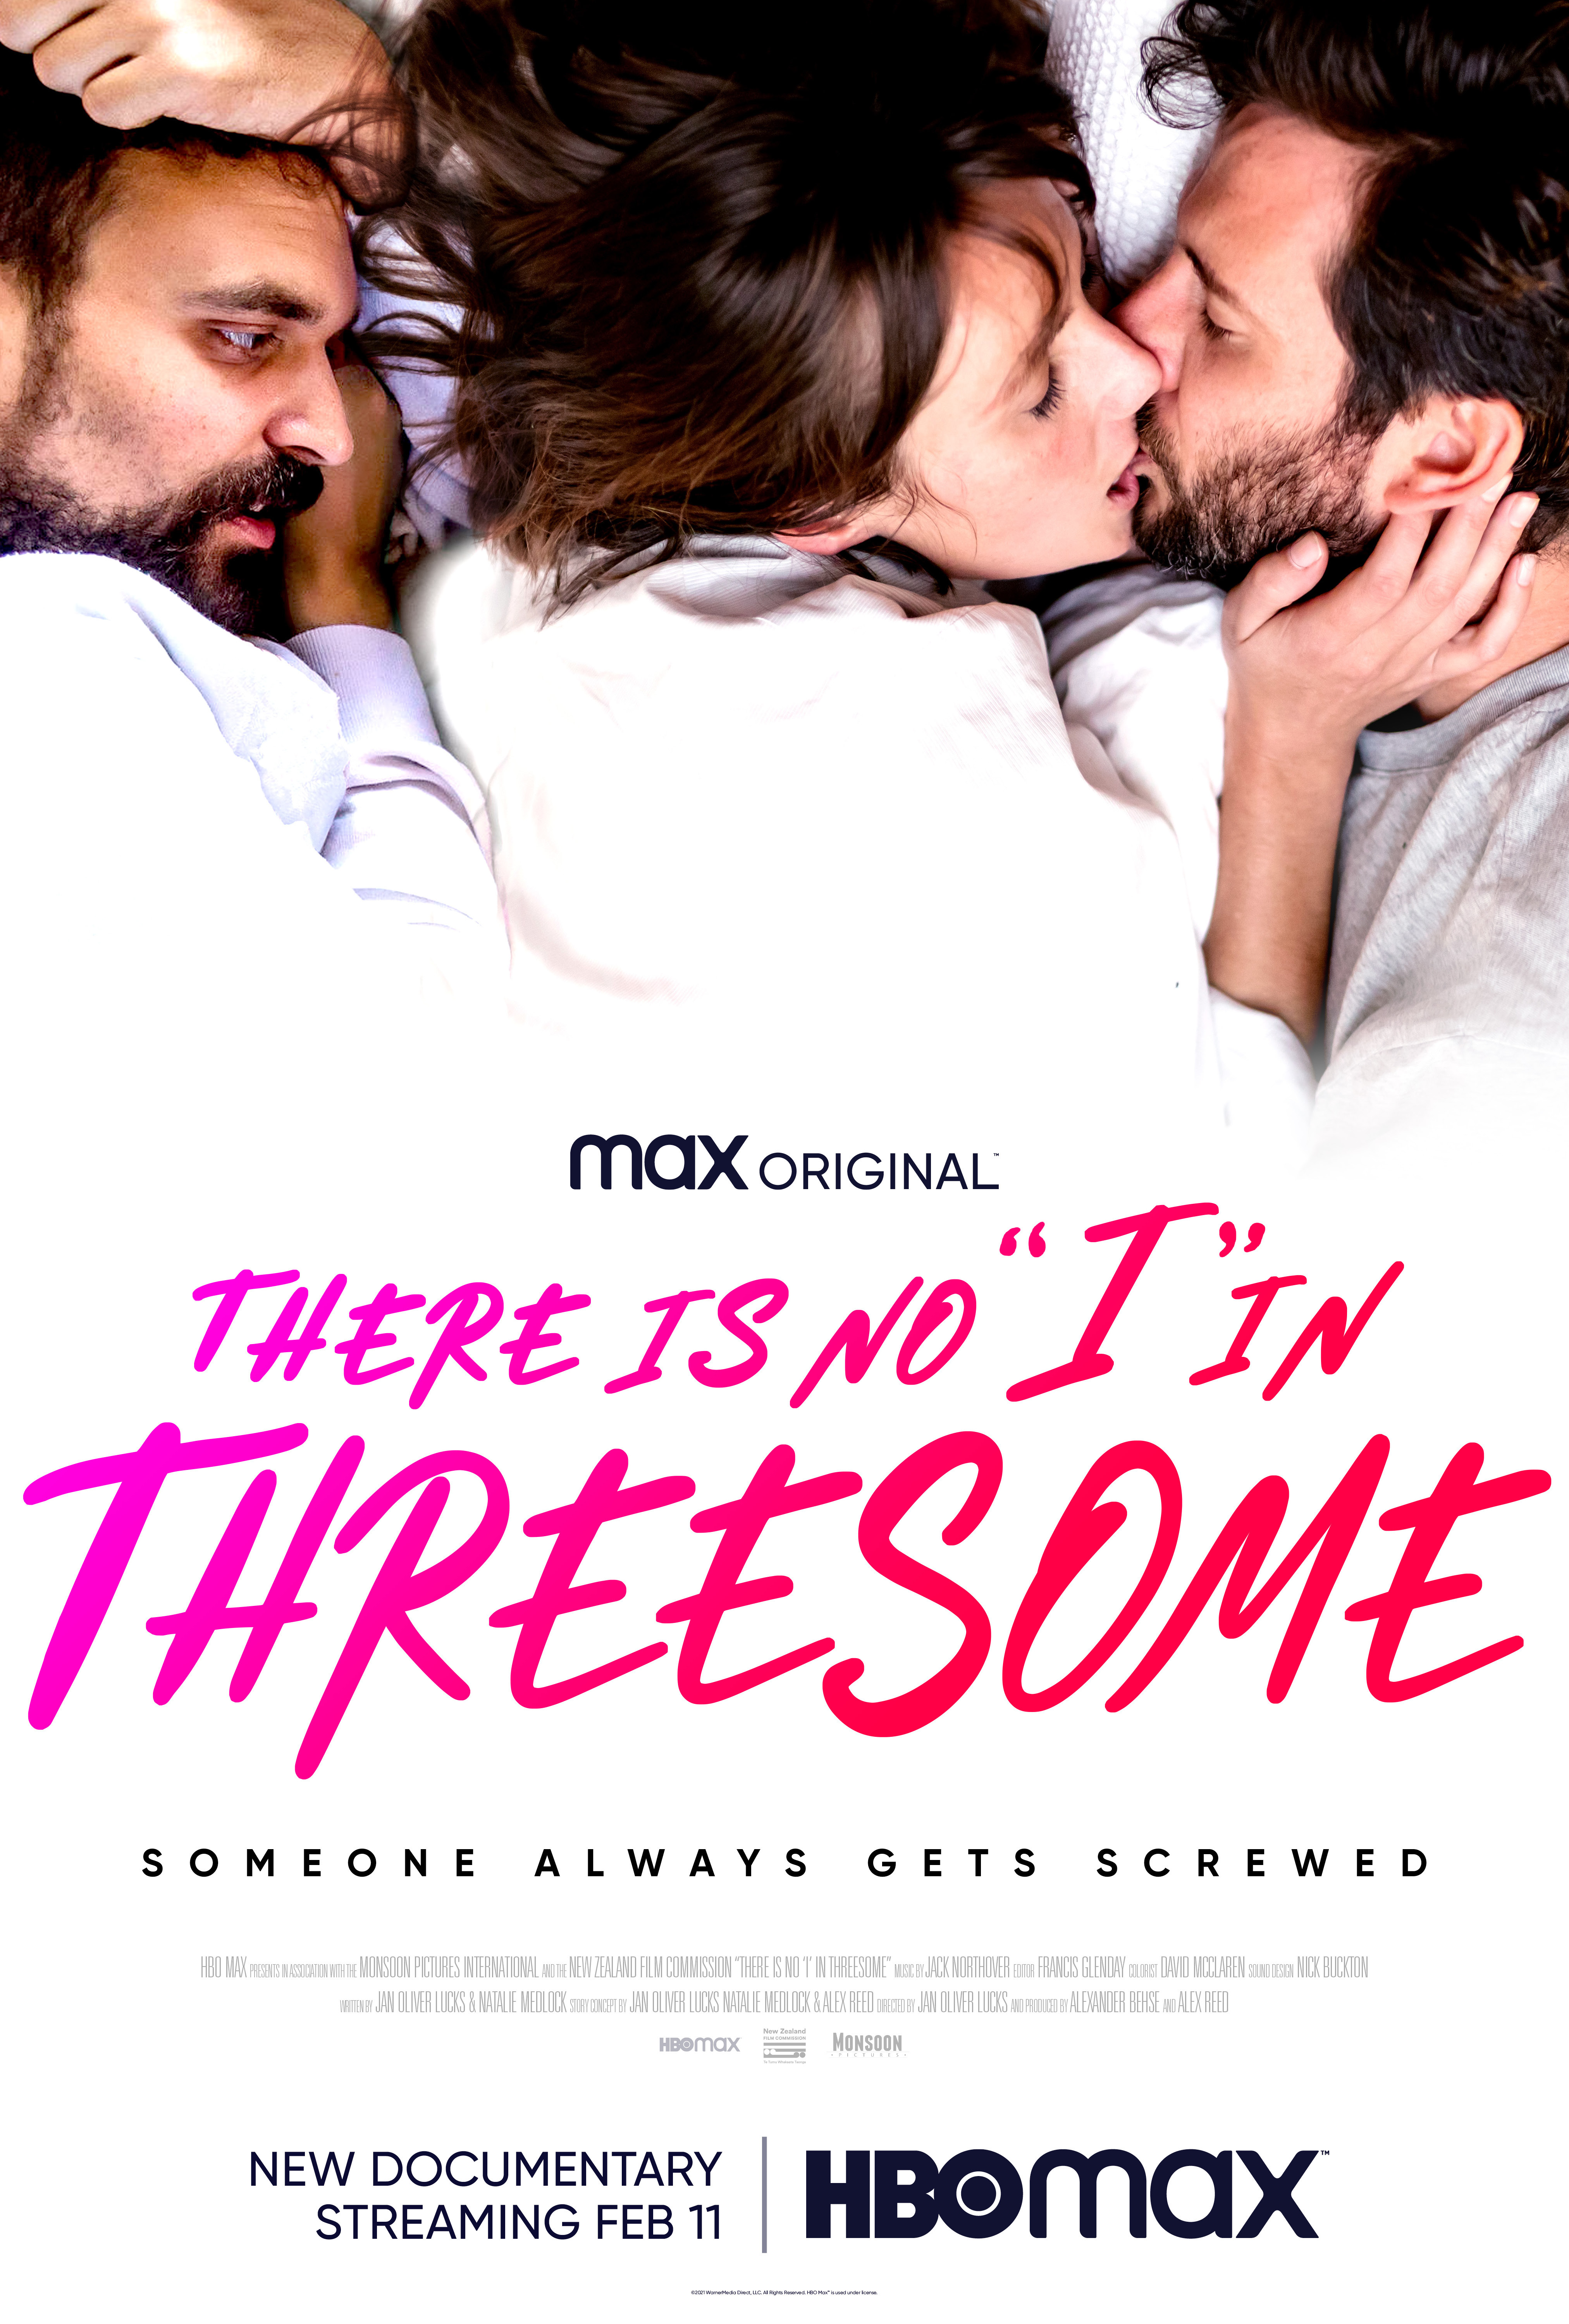 There's no i in threesome cast